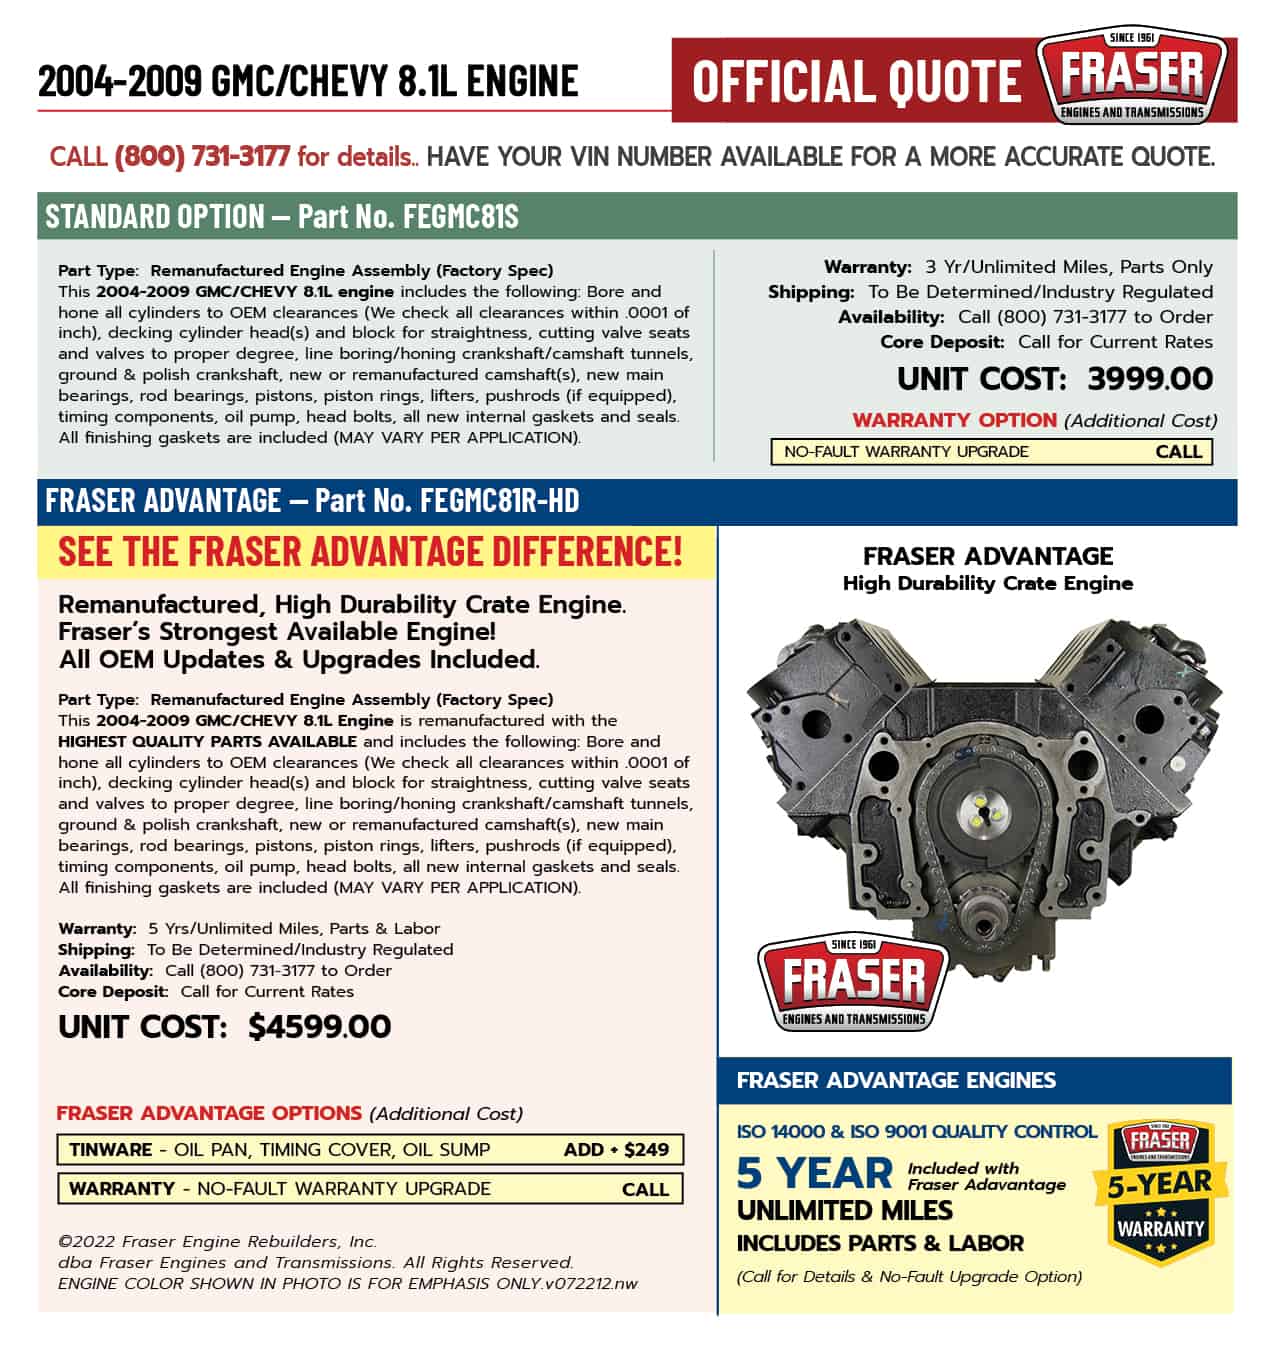 2004-2009 GM/Chevy 8.1 Liter Engine